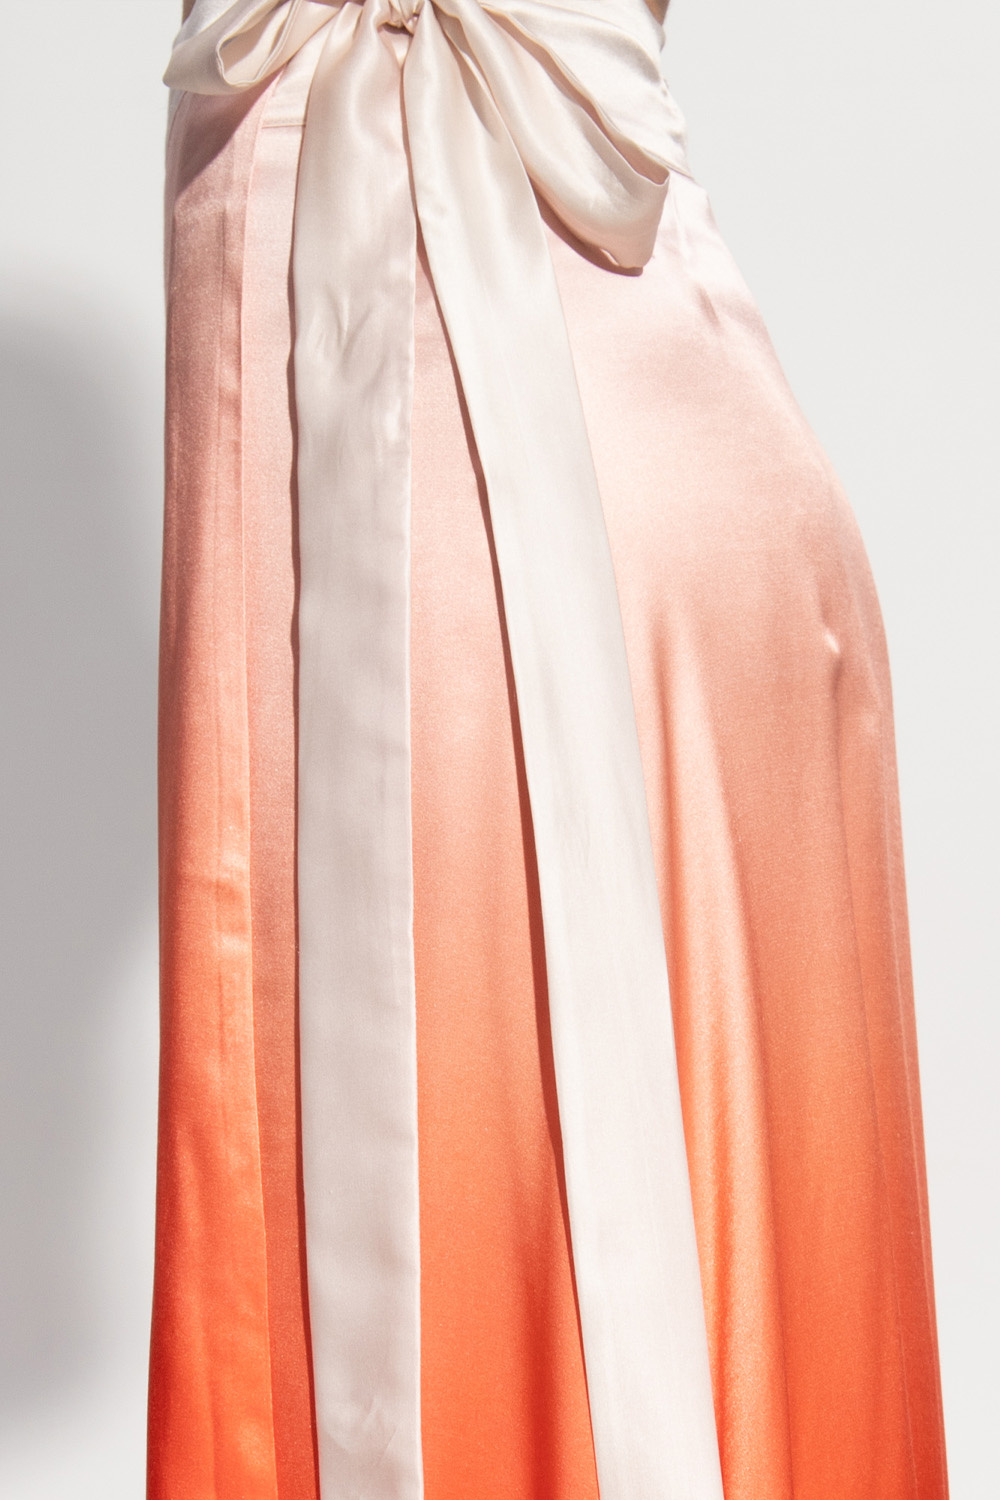 AllSaints ‘Vinia’ asymmetrical skirt